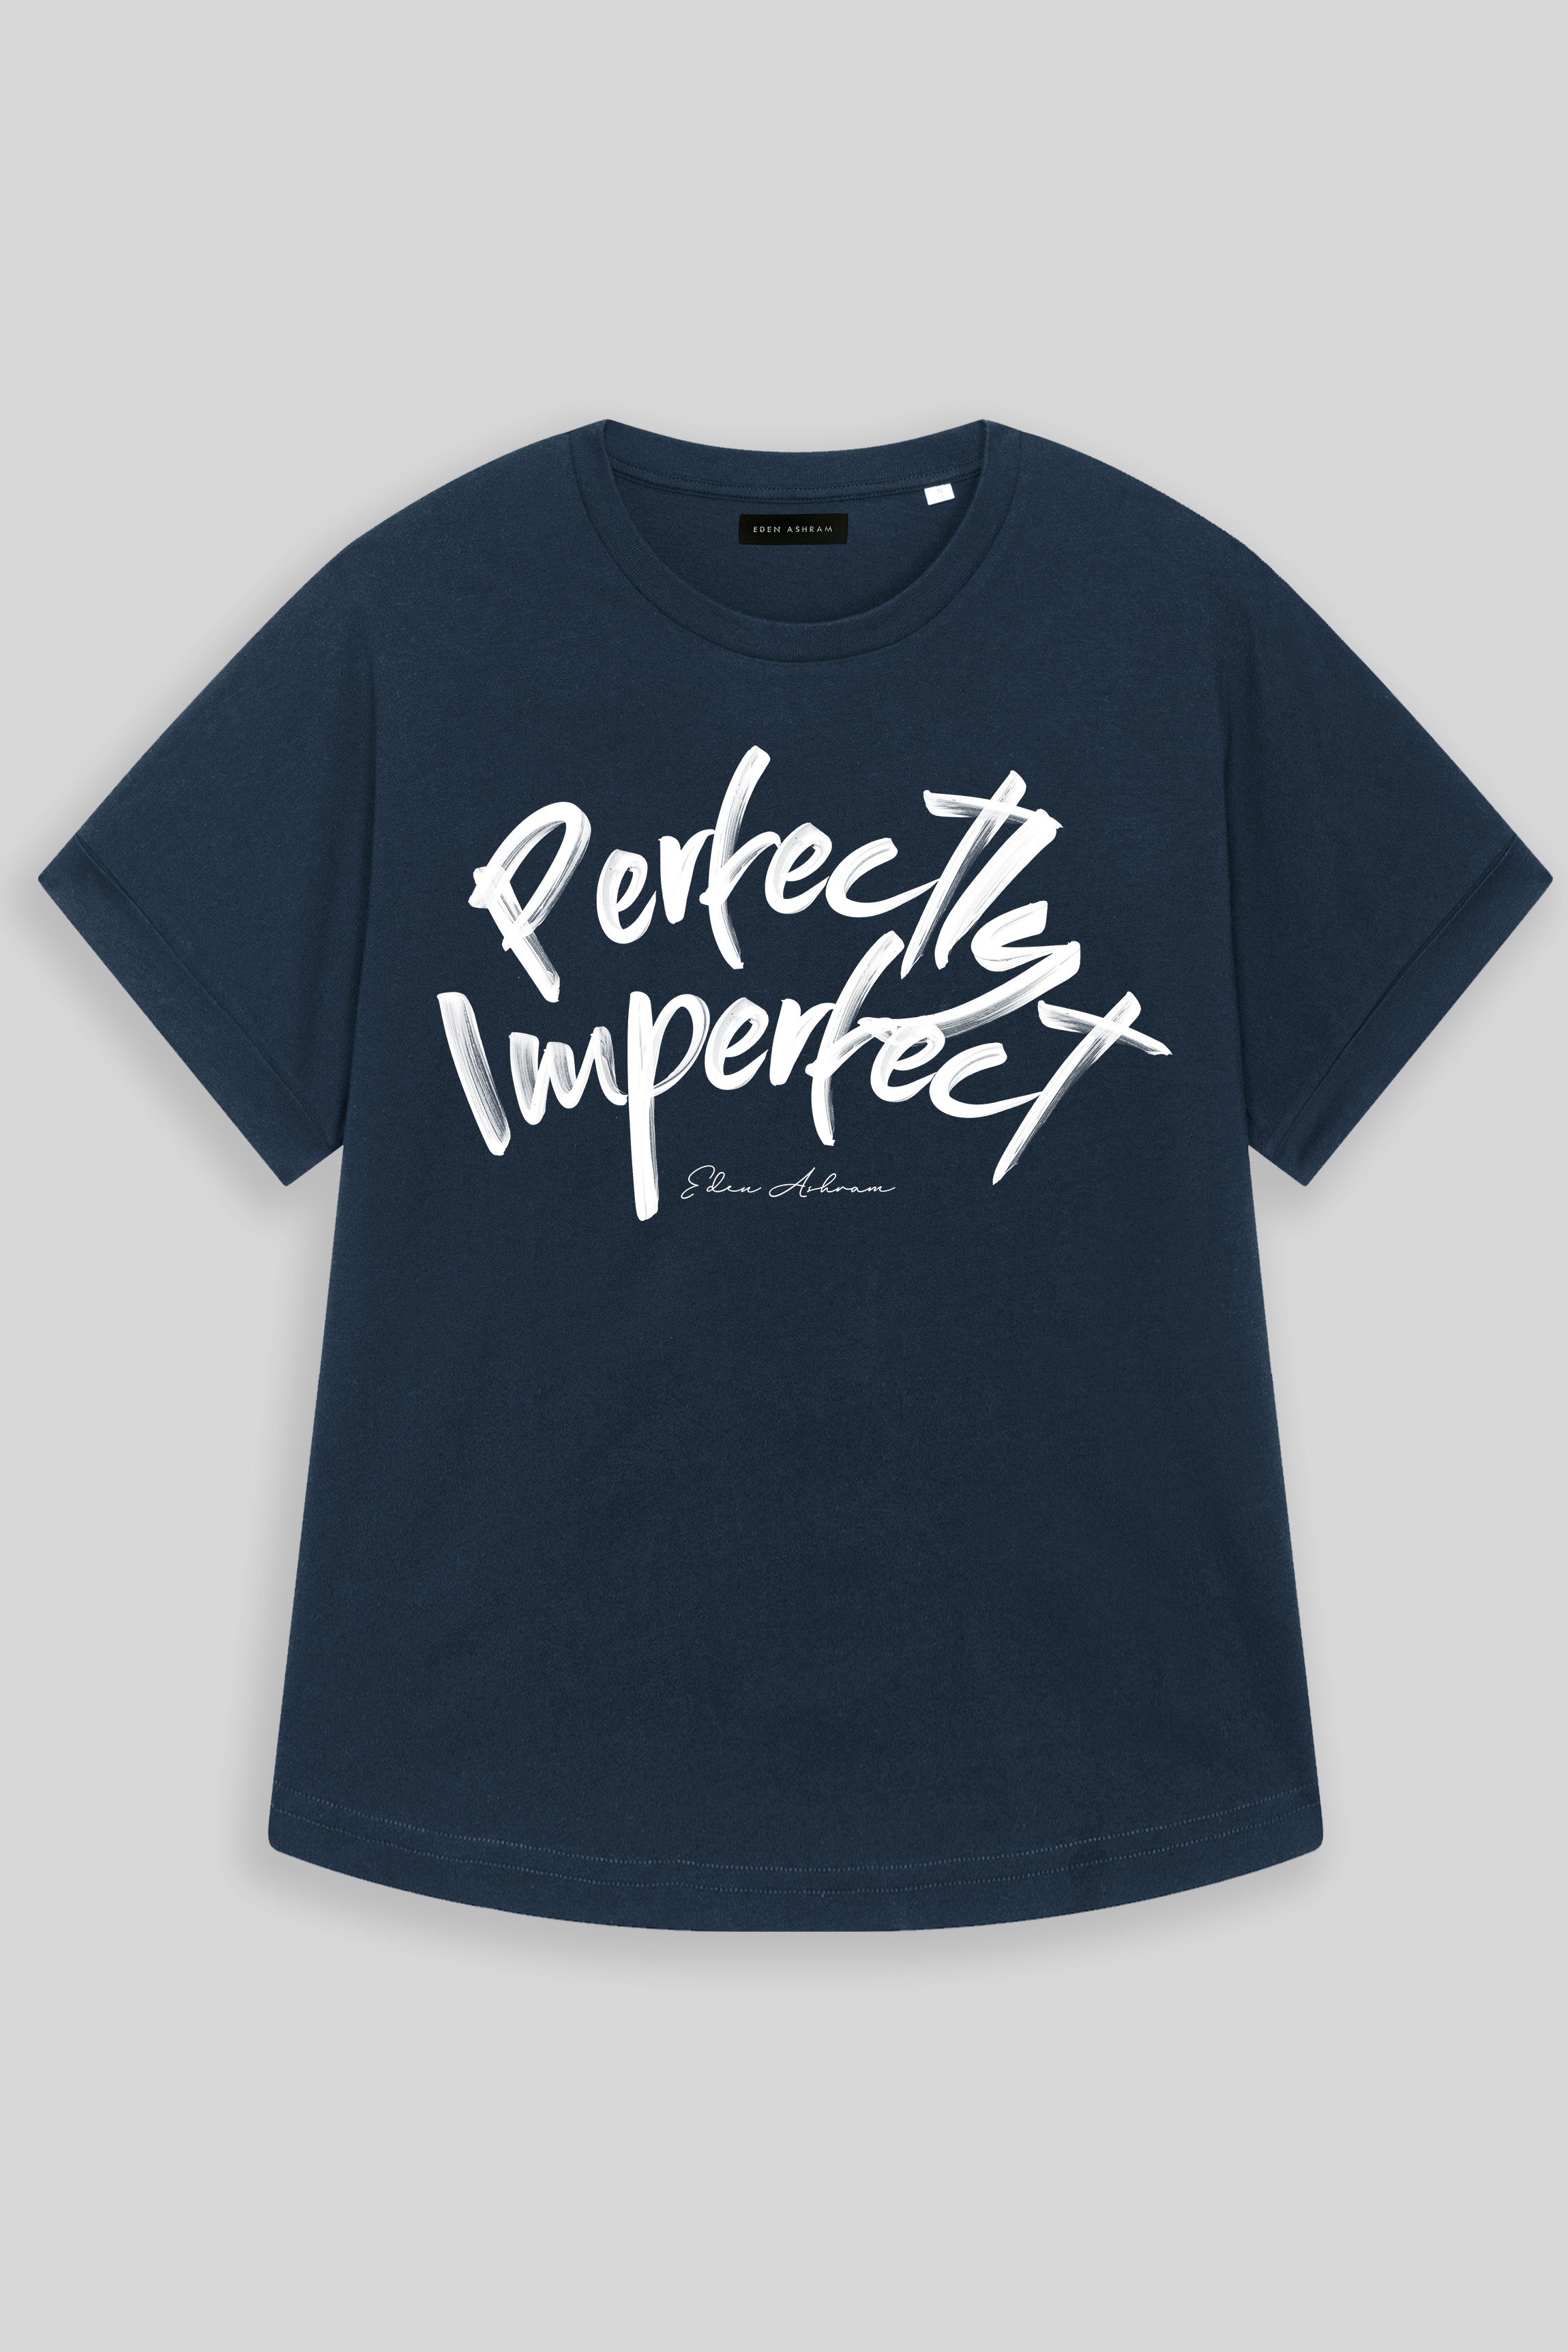 EDEN ASHRAM Perfectly Imperfect Premium Oversized Rolled Sleeve T-Shirt Navy